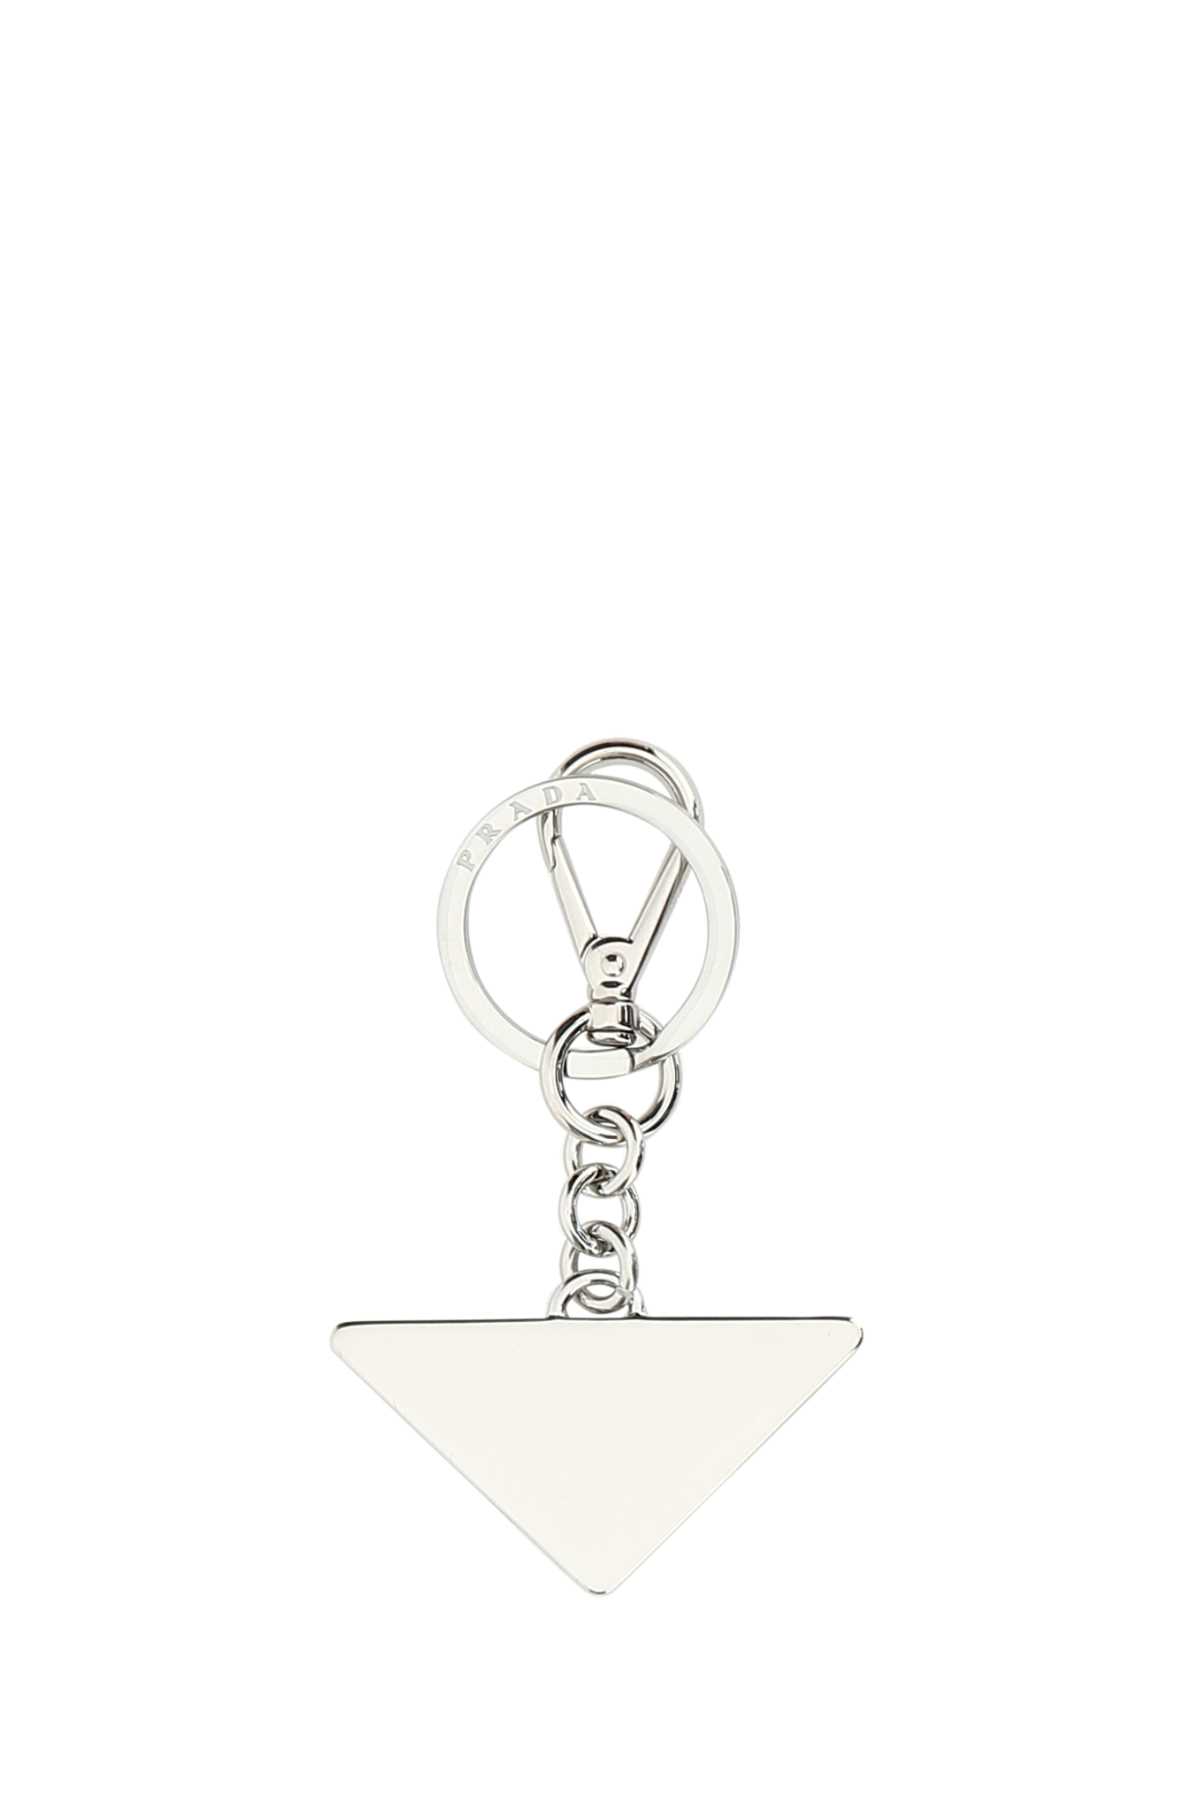 Shop Prada Black Metal Key Ring In F0002